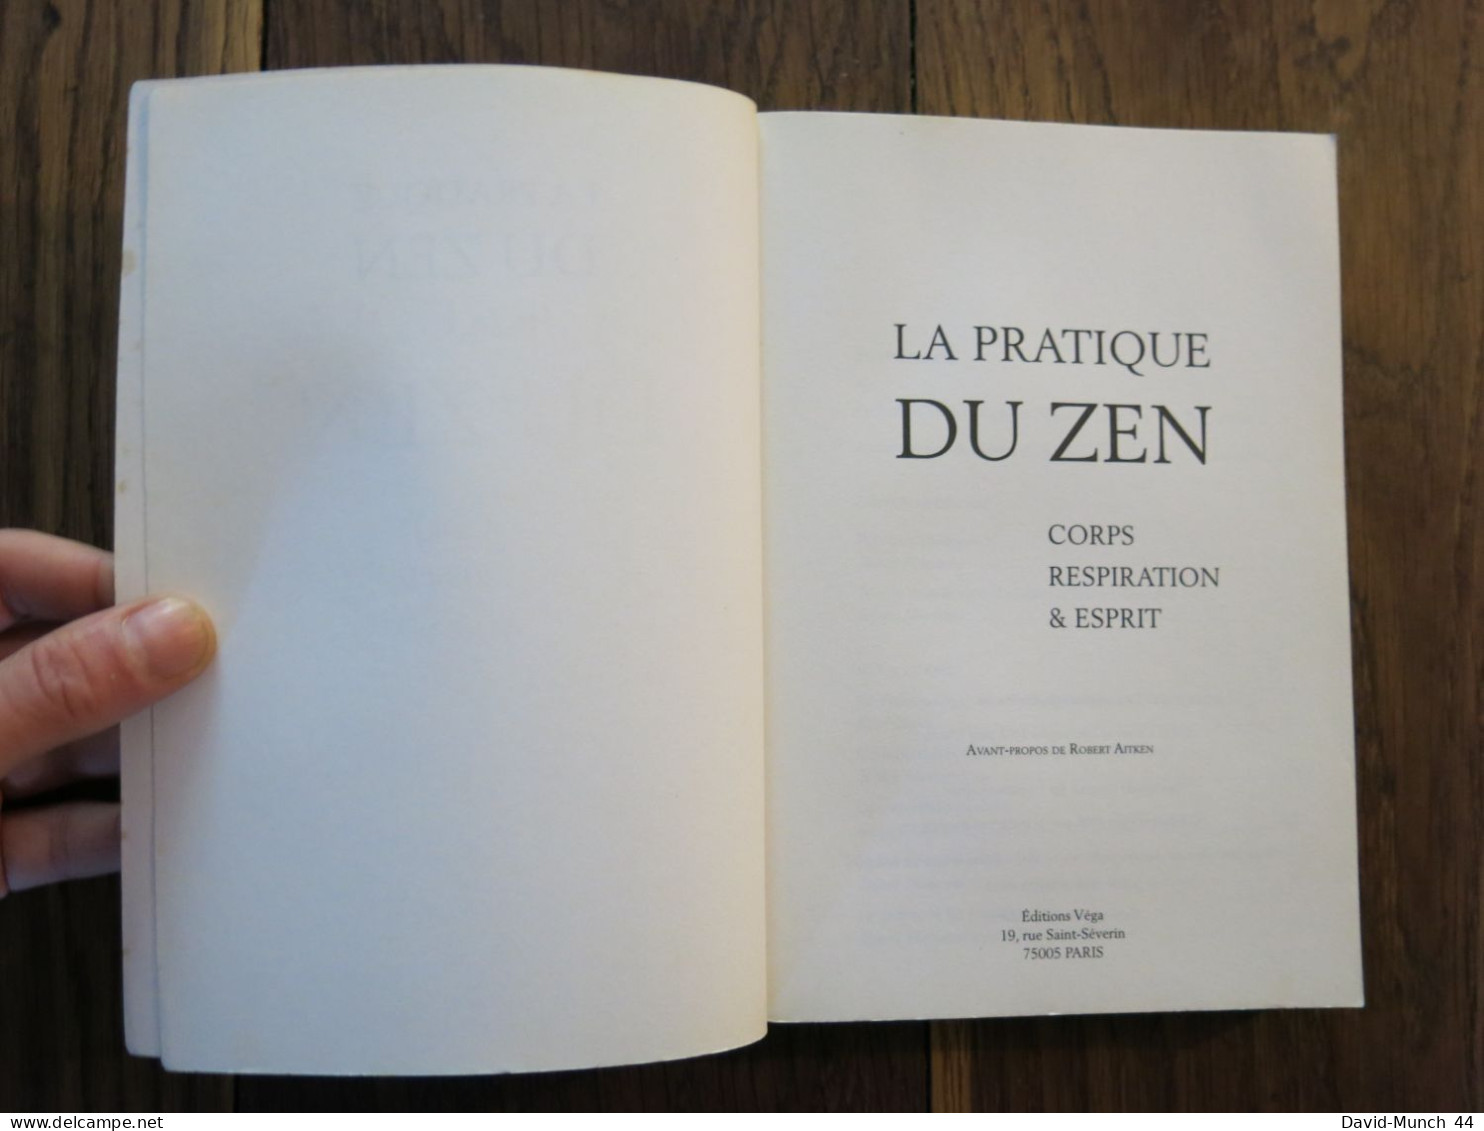 La Pratique Du Zen De Bernie Glassman Et Taizan Maezumi. Editions Véga. 2008 - Health